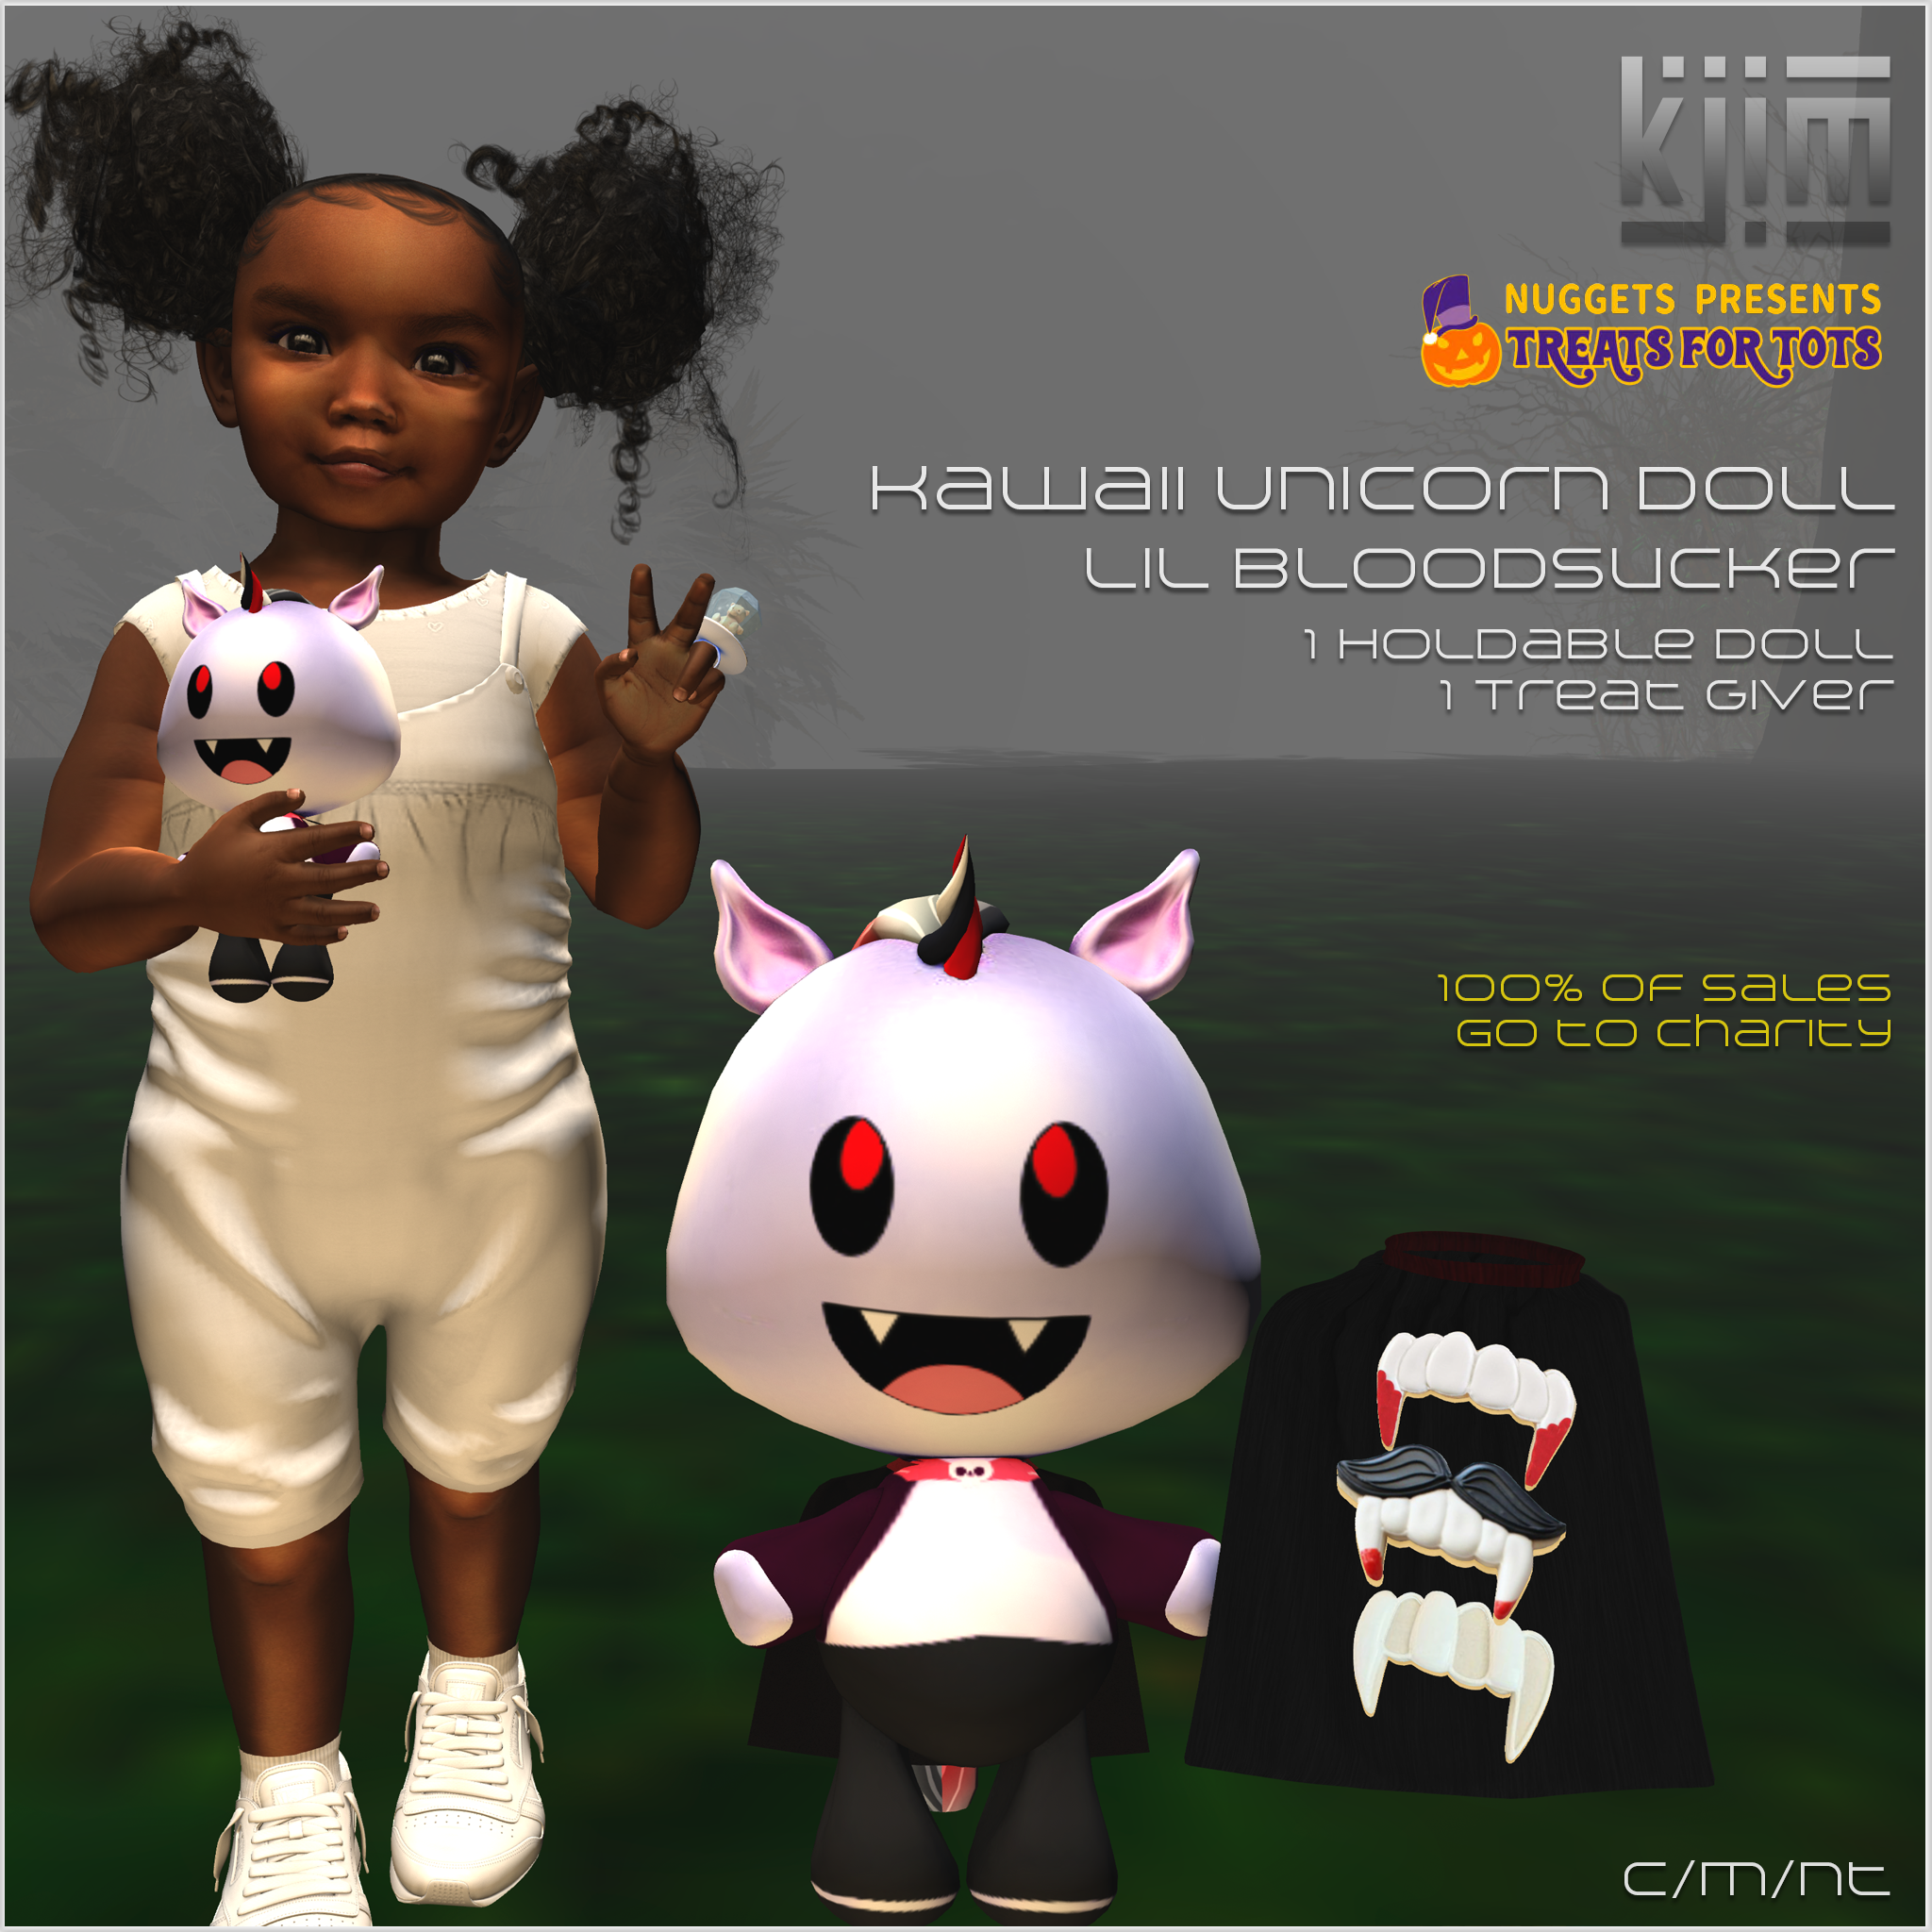 KJIm Unicorn Dolls Ad - Lil Bloodsucker